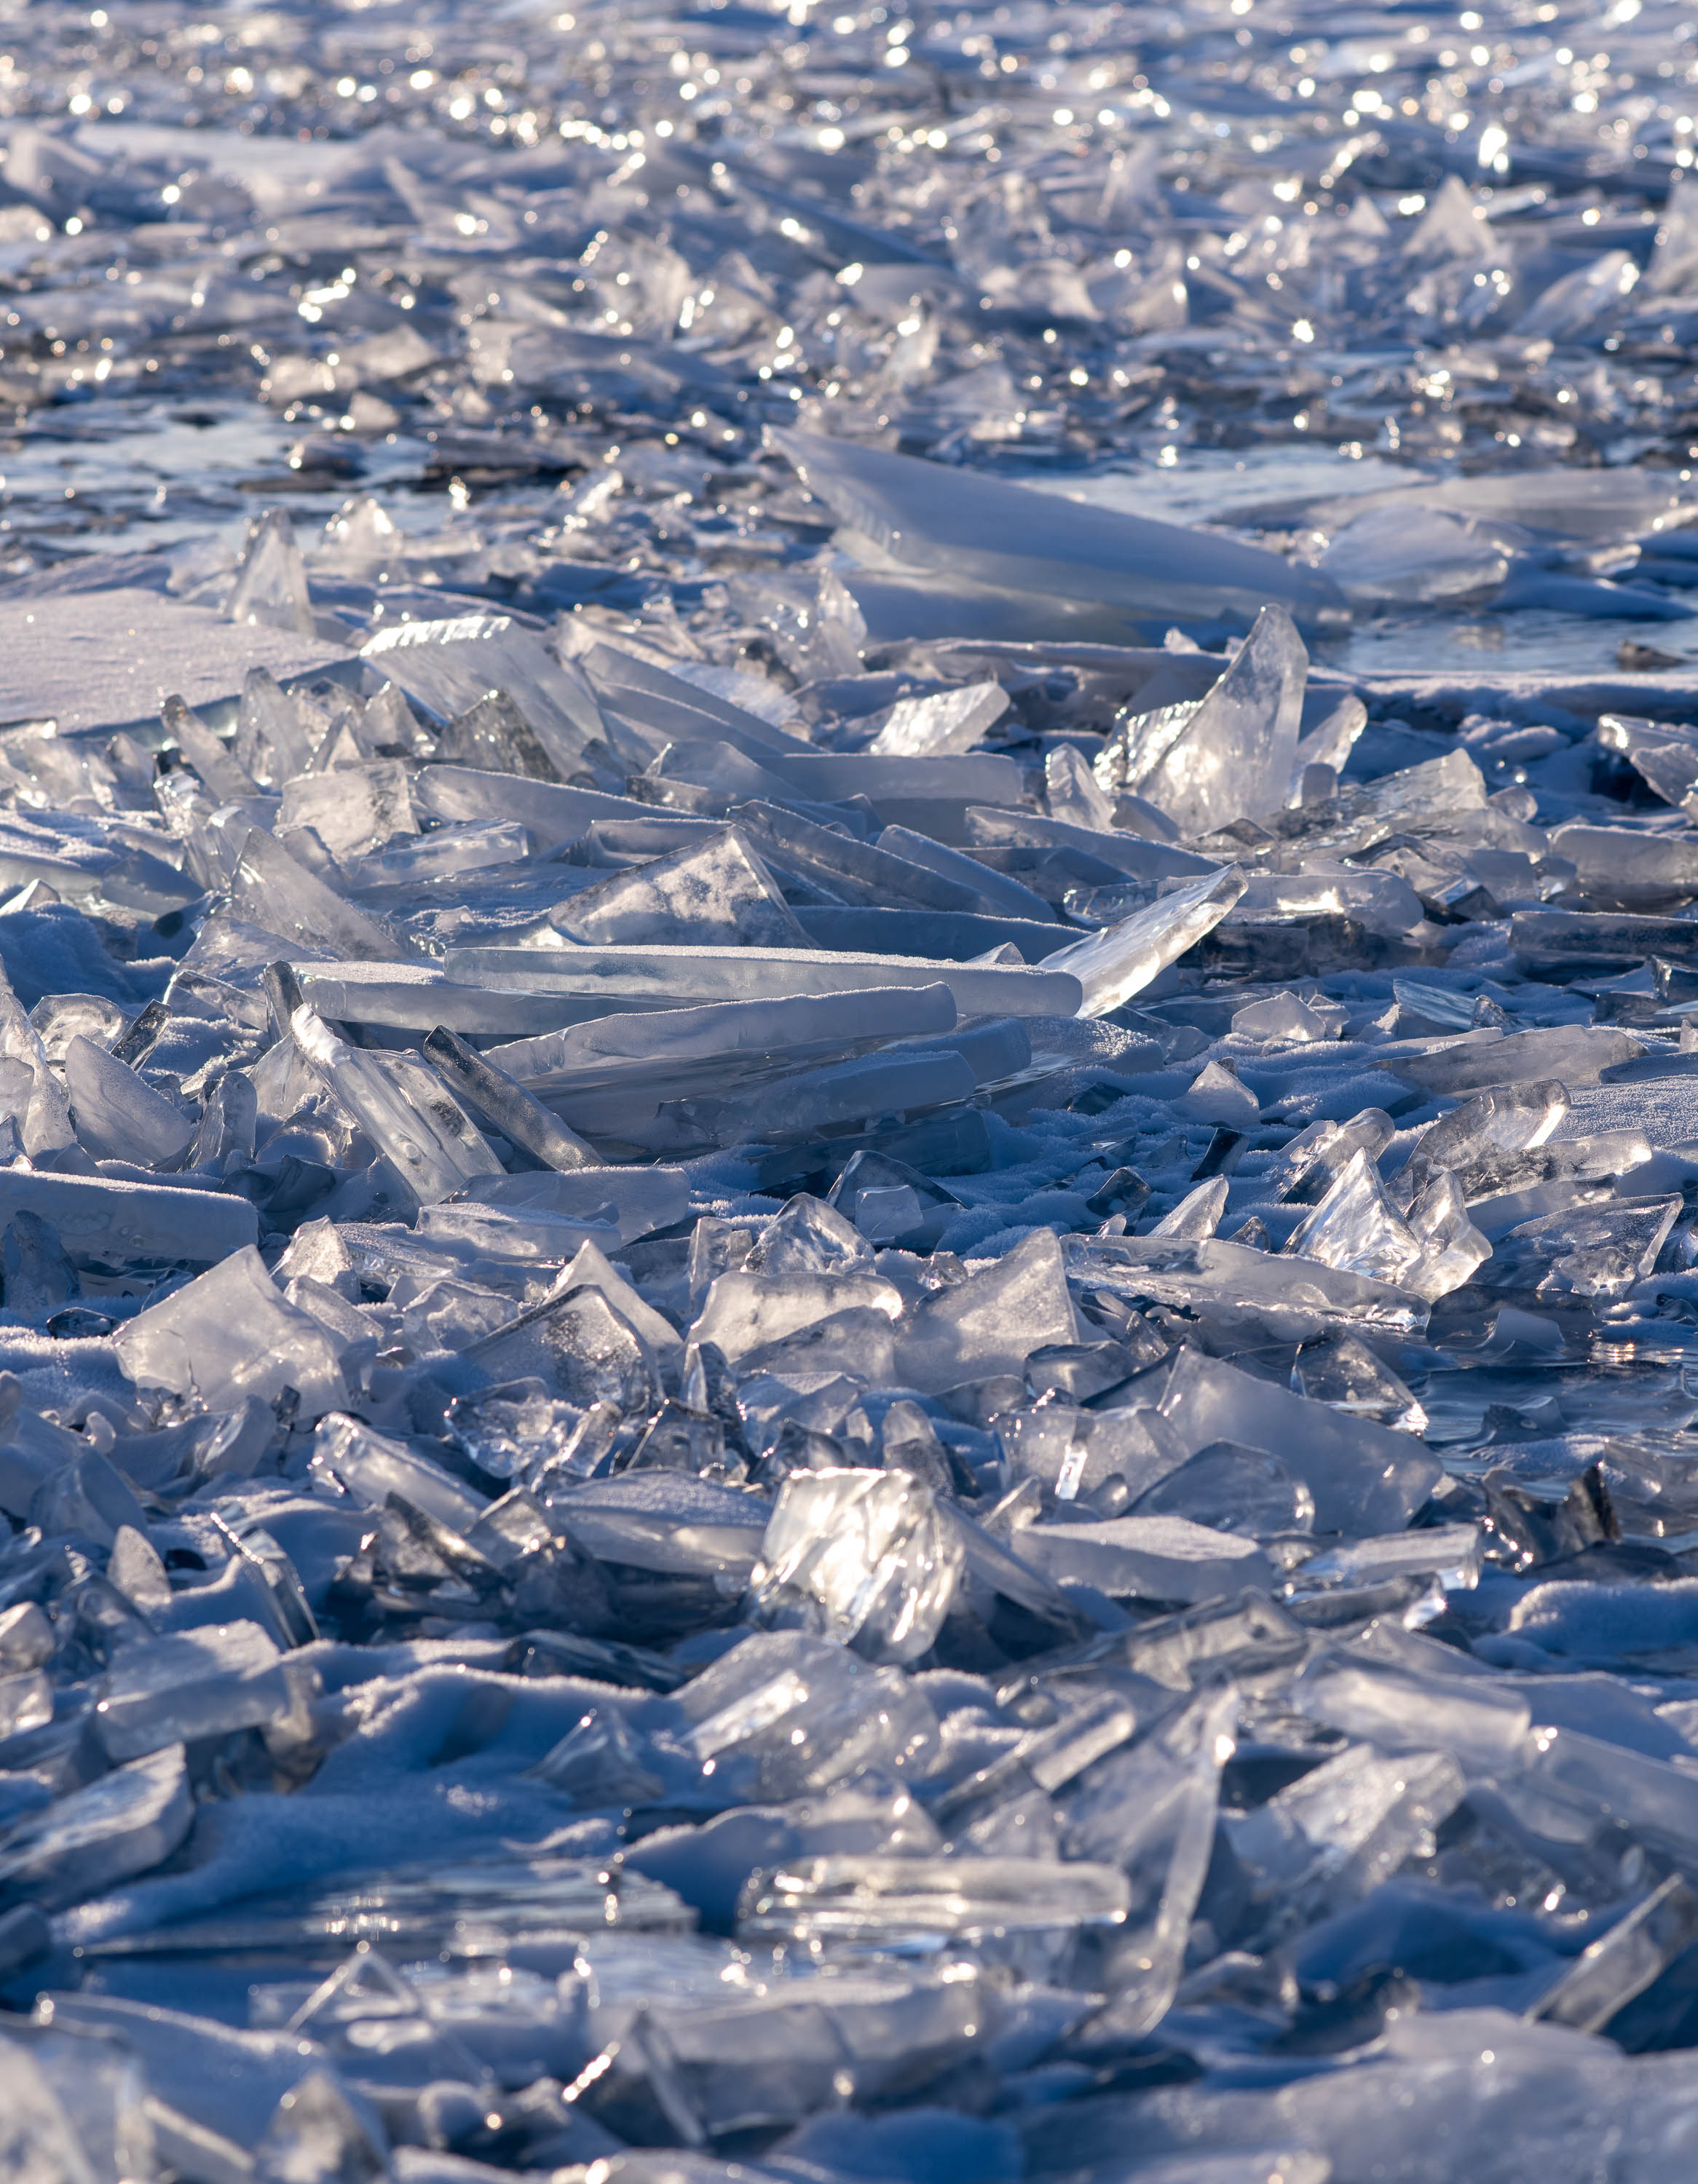 Crystalline glass-like ice on a fully snow-covered land, Lake Baikal #10, Siberia, Russia